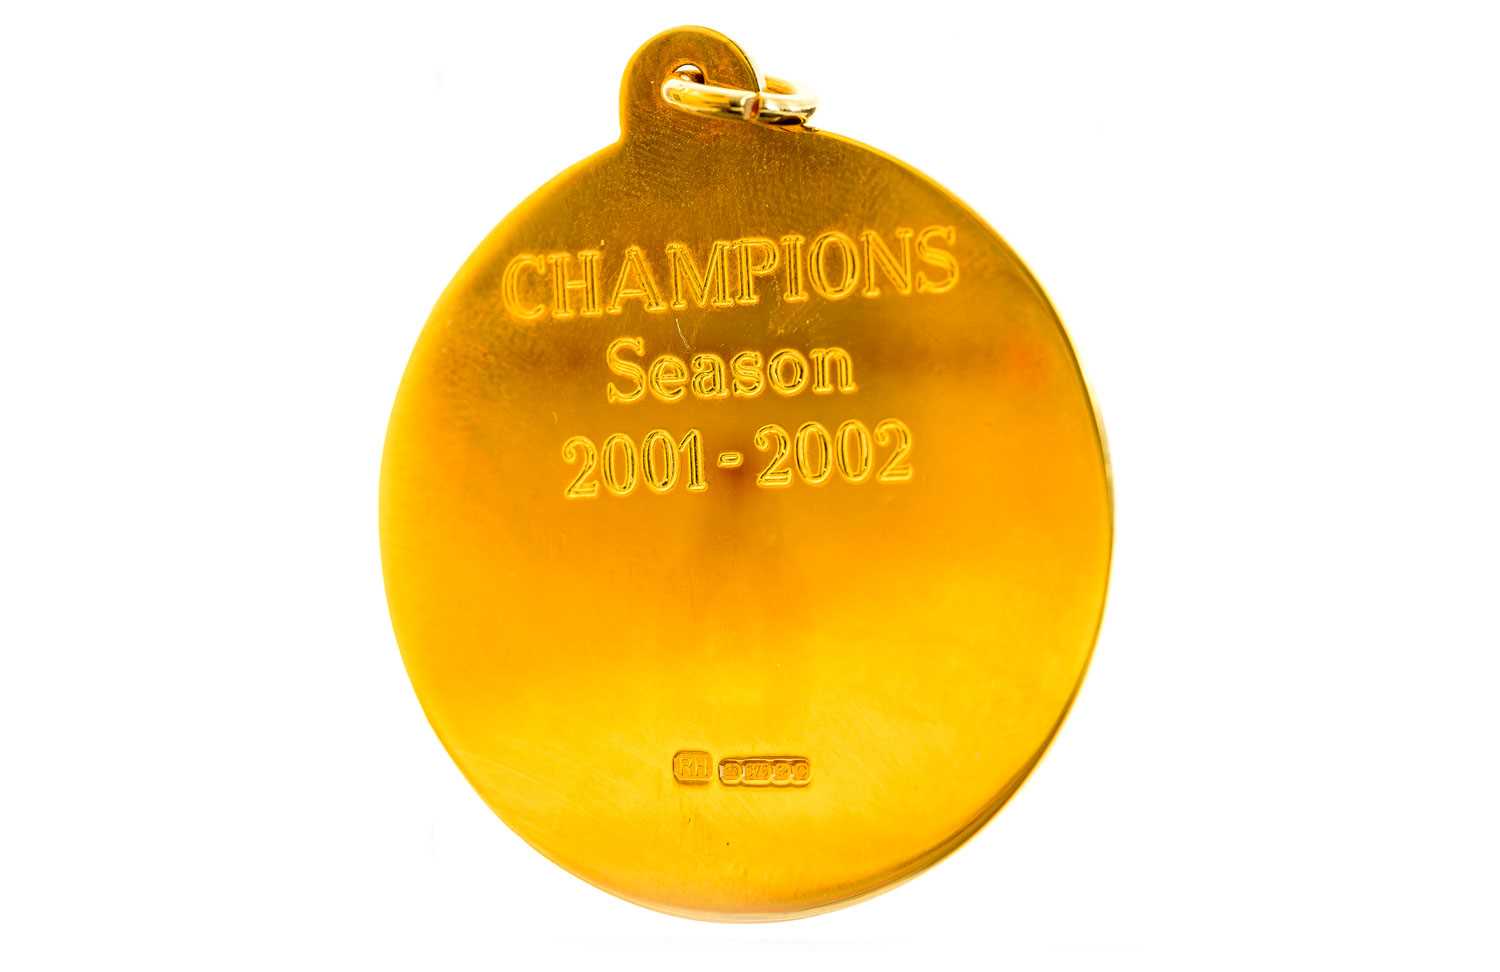 BOBBY PETTA OF CELTIC F.C., SPL CHAMPIONS WINNERS GOLD MEDAL, 2001/02 - Image 2 of 2